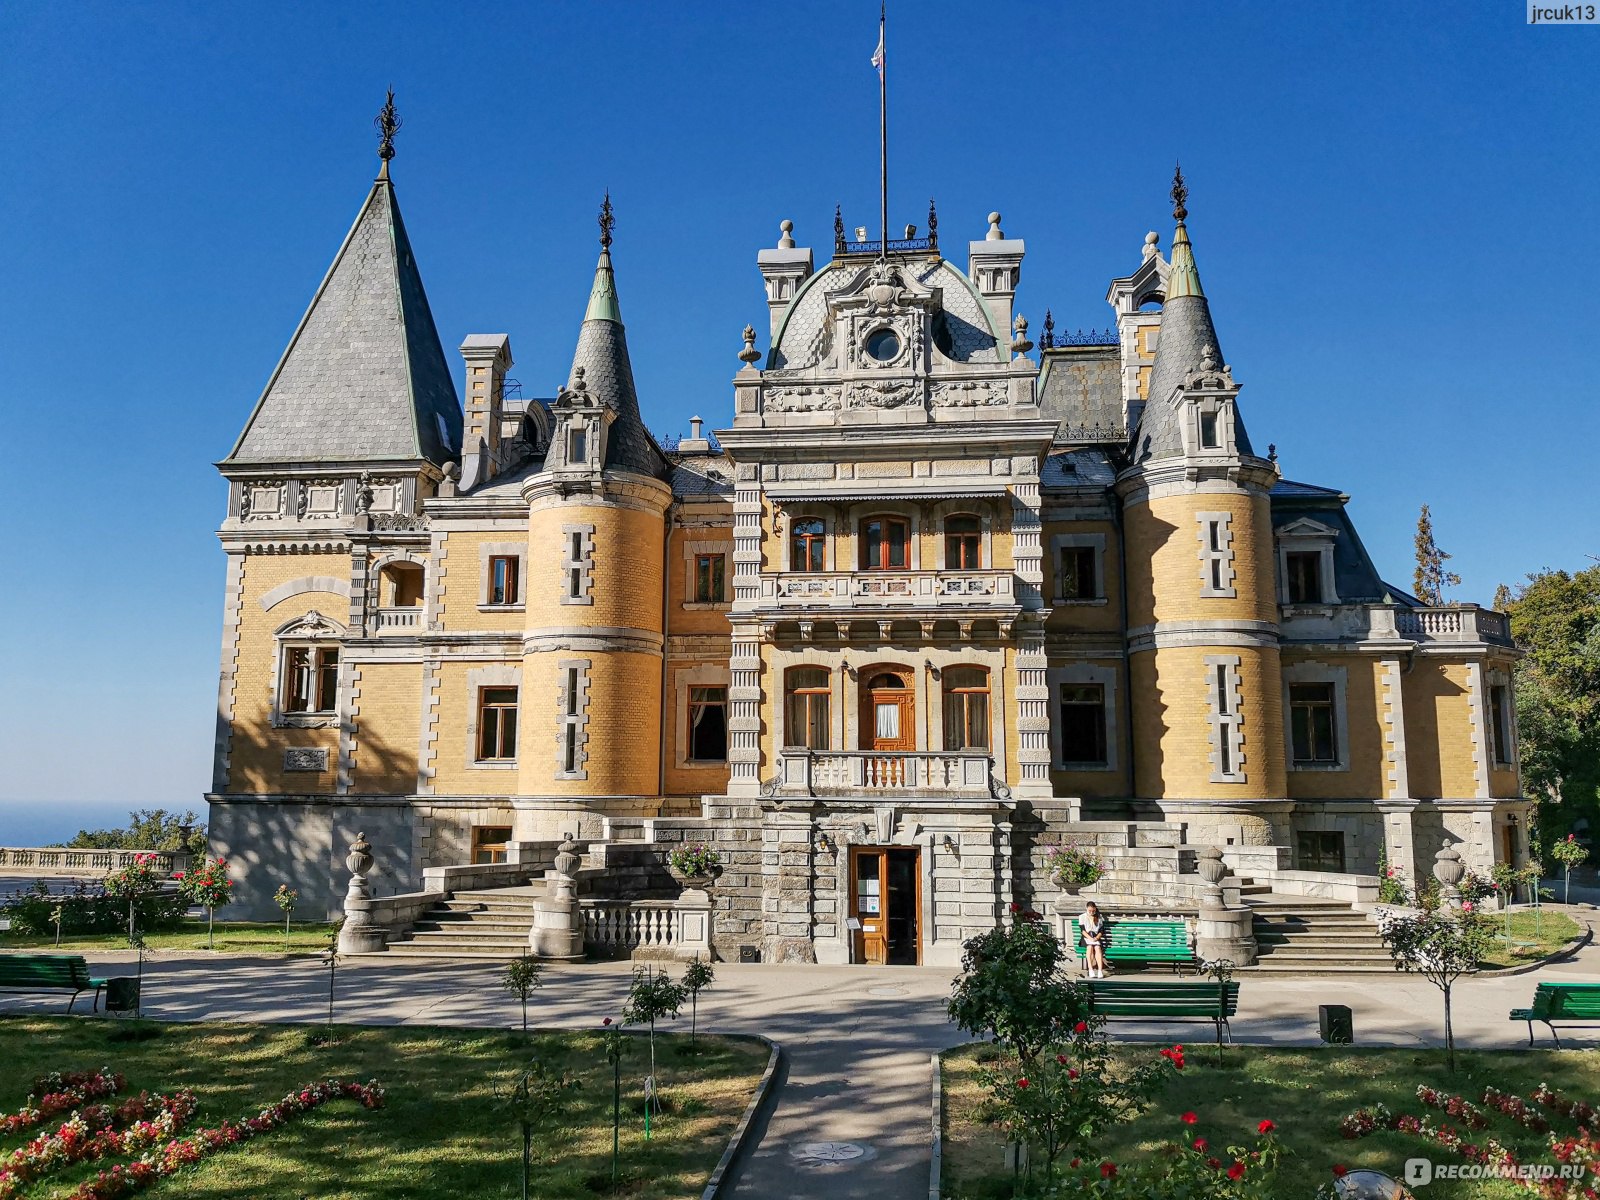 Массандровский дворец императора Александра III